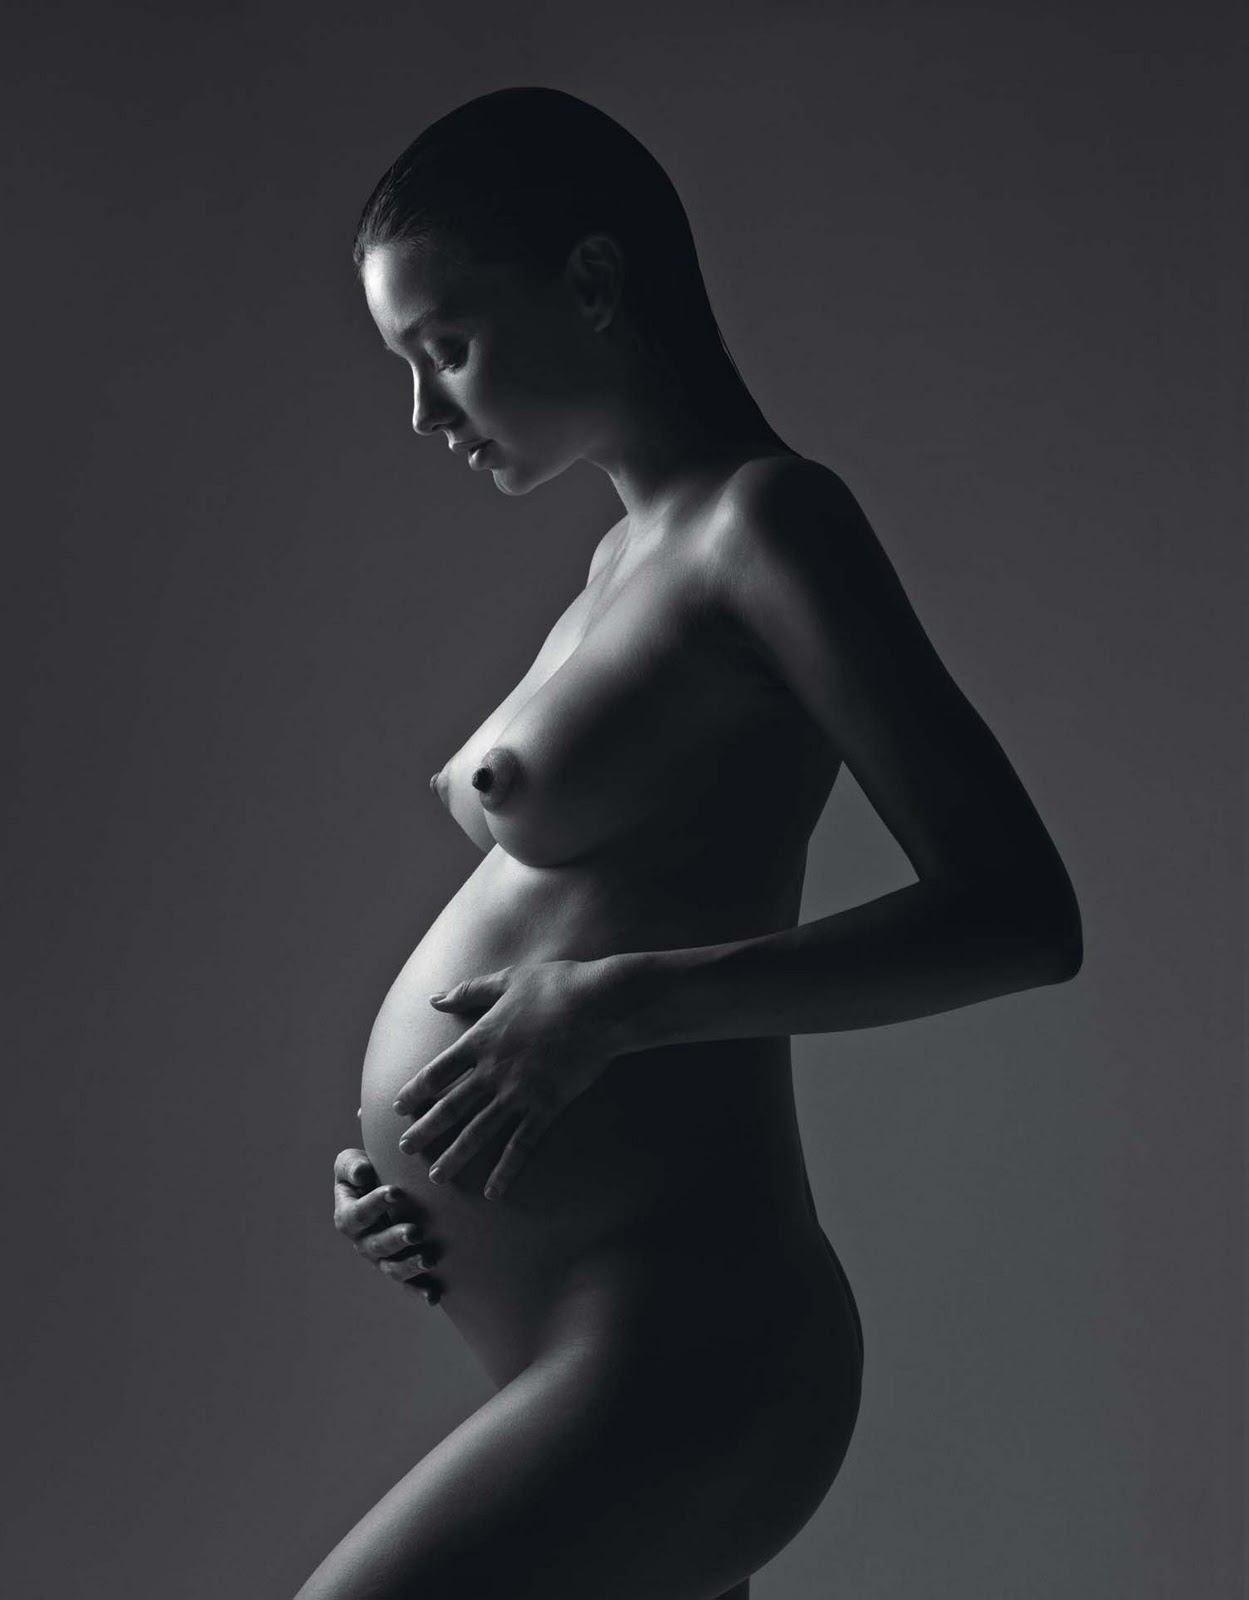 http://2.bp.blogspot.com/_-06P2y9no8g/TTlQbHBdH4I/AAAAAAAAAVI/uCjZfe3QX20/s1600/miranda-kerr-posing-pregnant-nude-in-w-magazine-december-2010-issue-nsfw-01.jpg